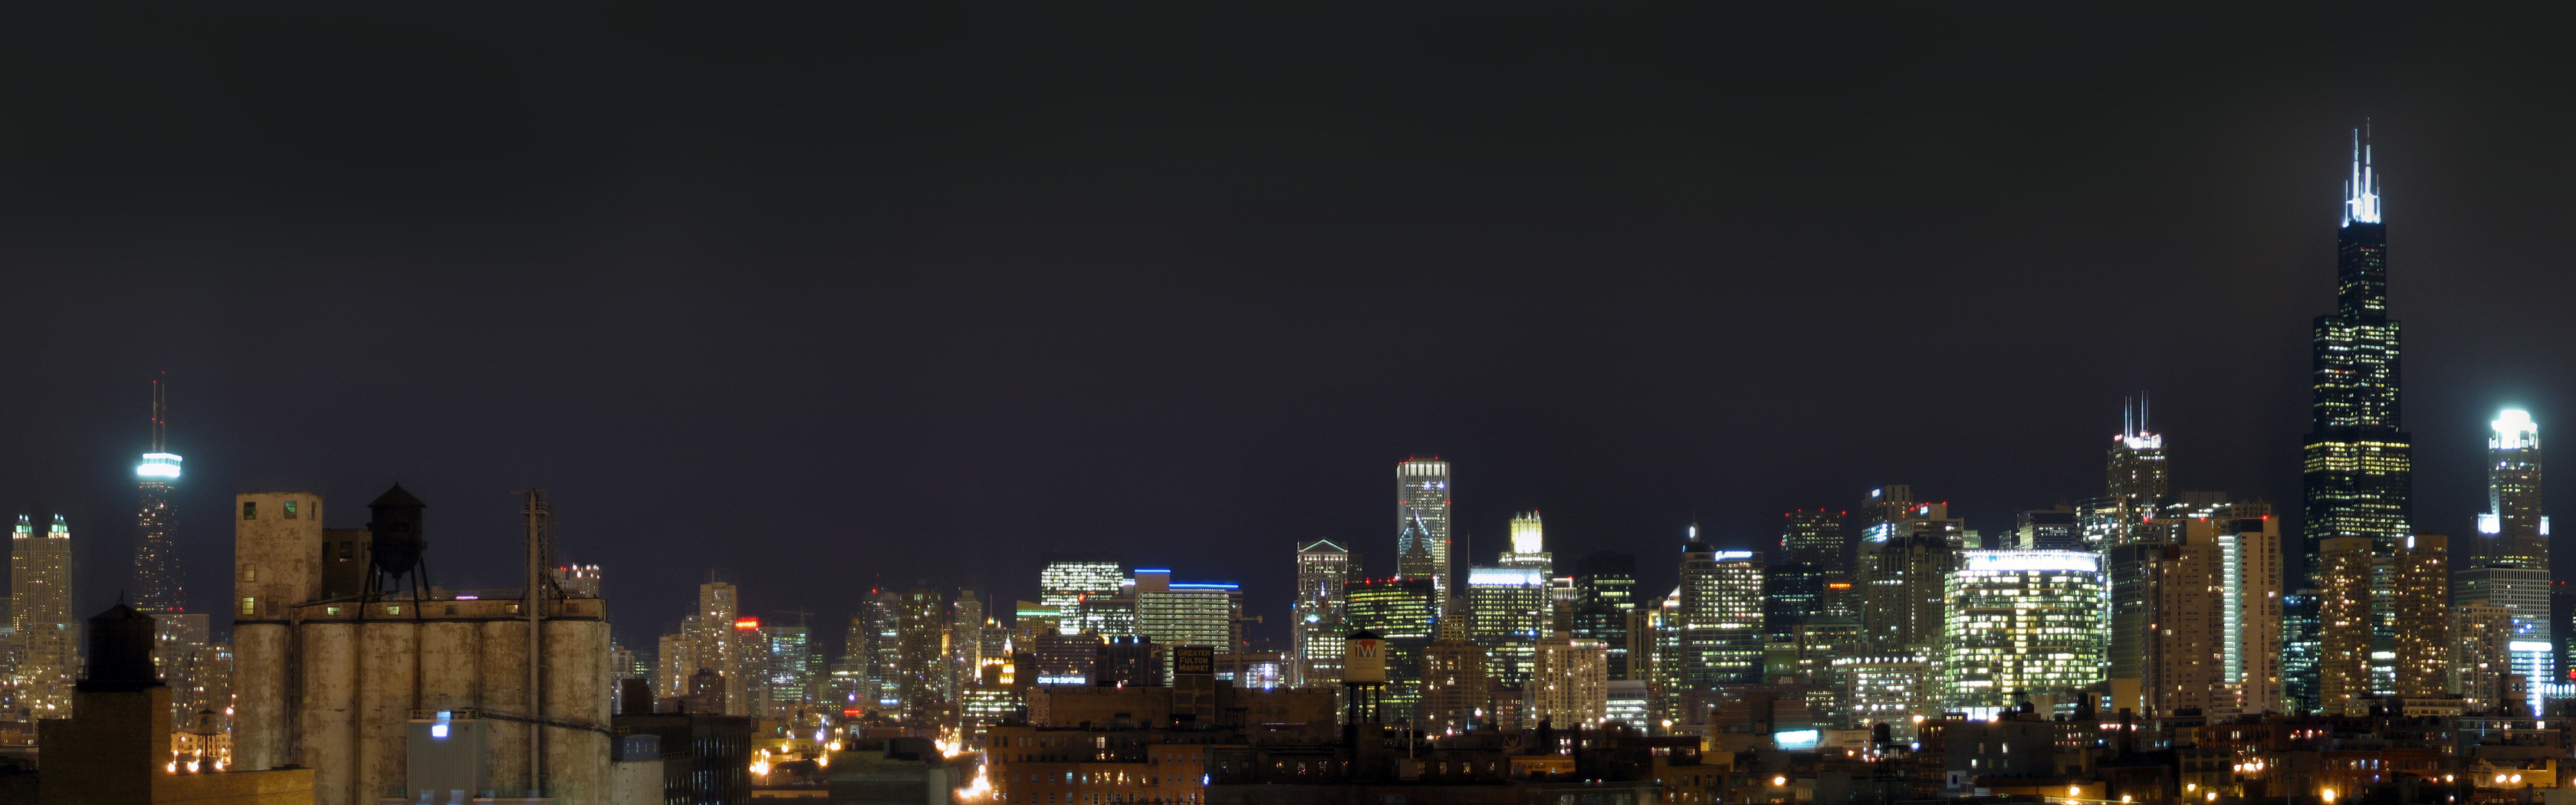 fondo de pantalla 3360x1050,paisaje urbano,ciudad,área metropolitana,noche,horizonte